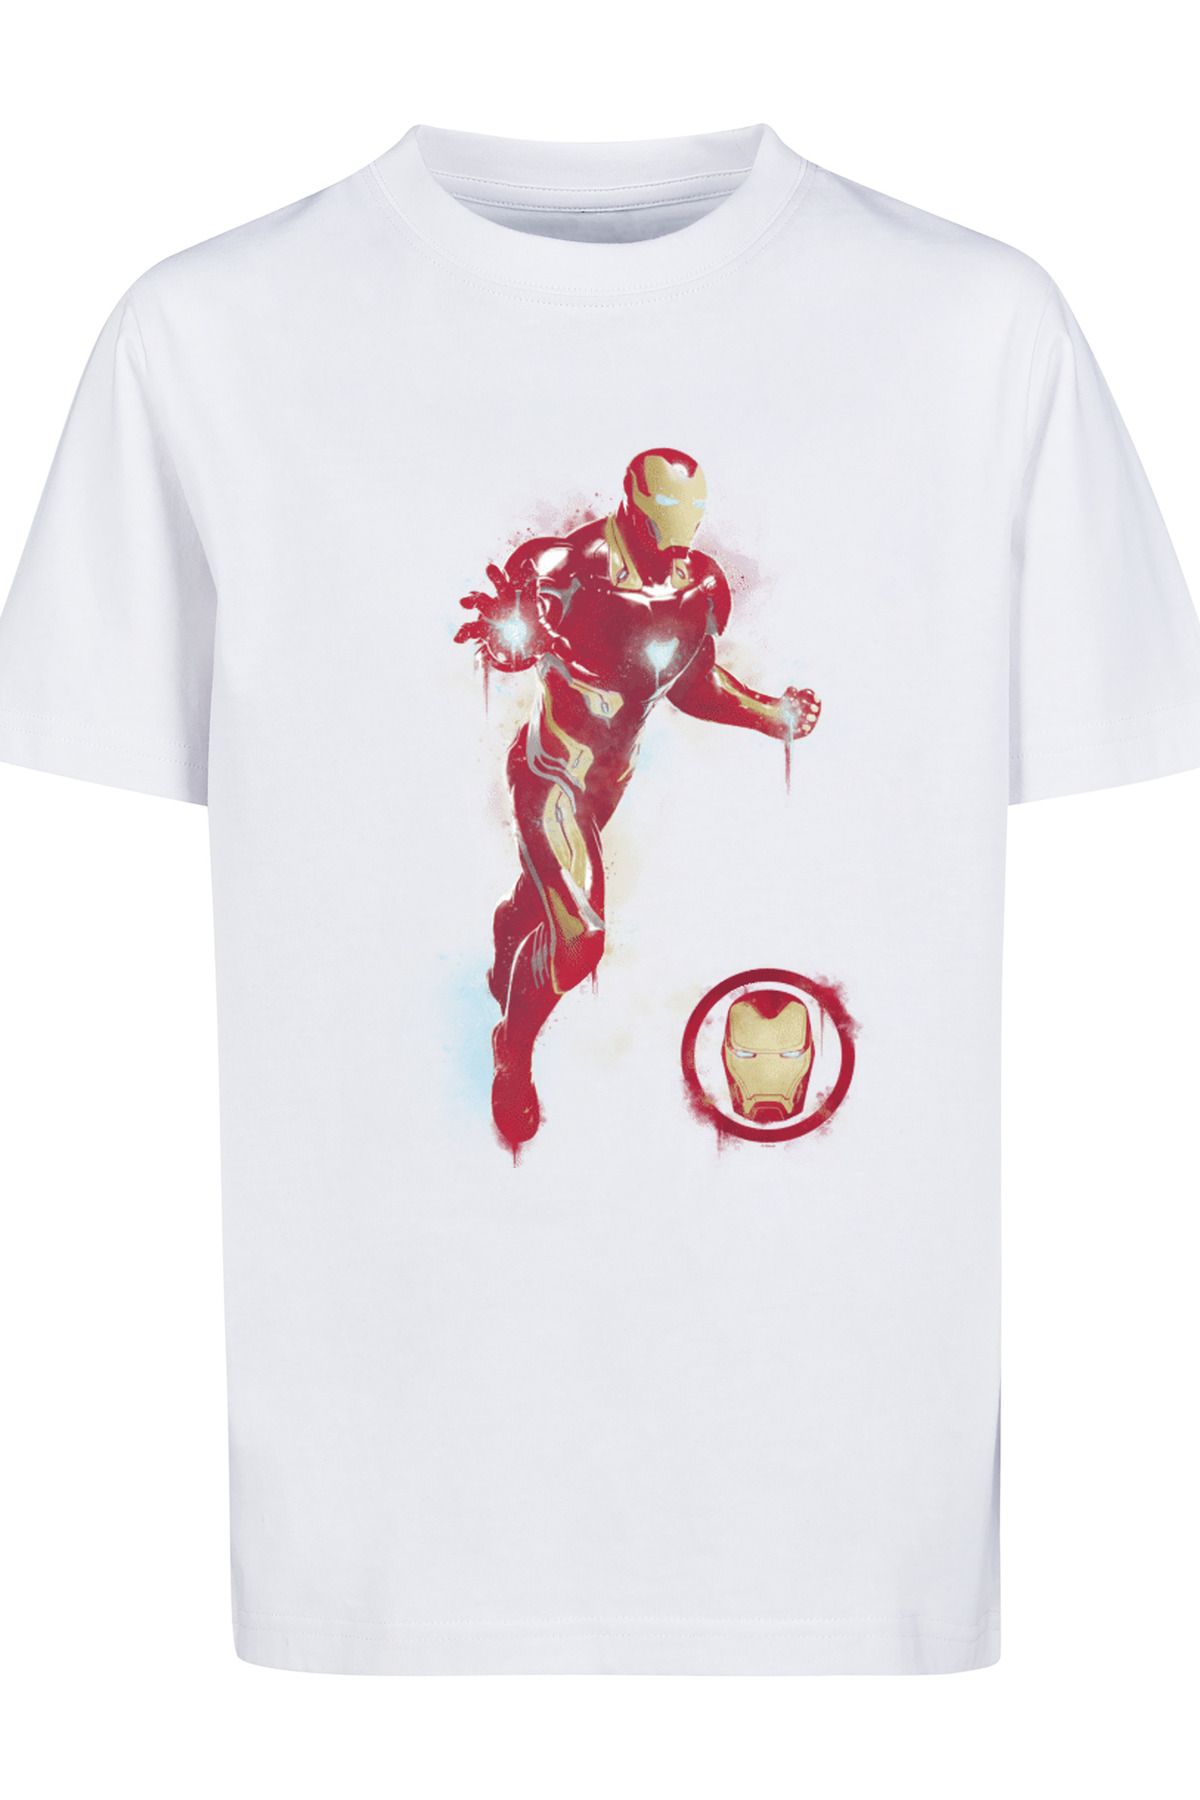 Endgame Painted mit Kinder Avengers - Trendyol Basic-T-Shirt Marvel Iron Man für F4NT4STIC Kinder